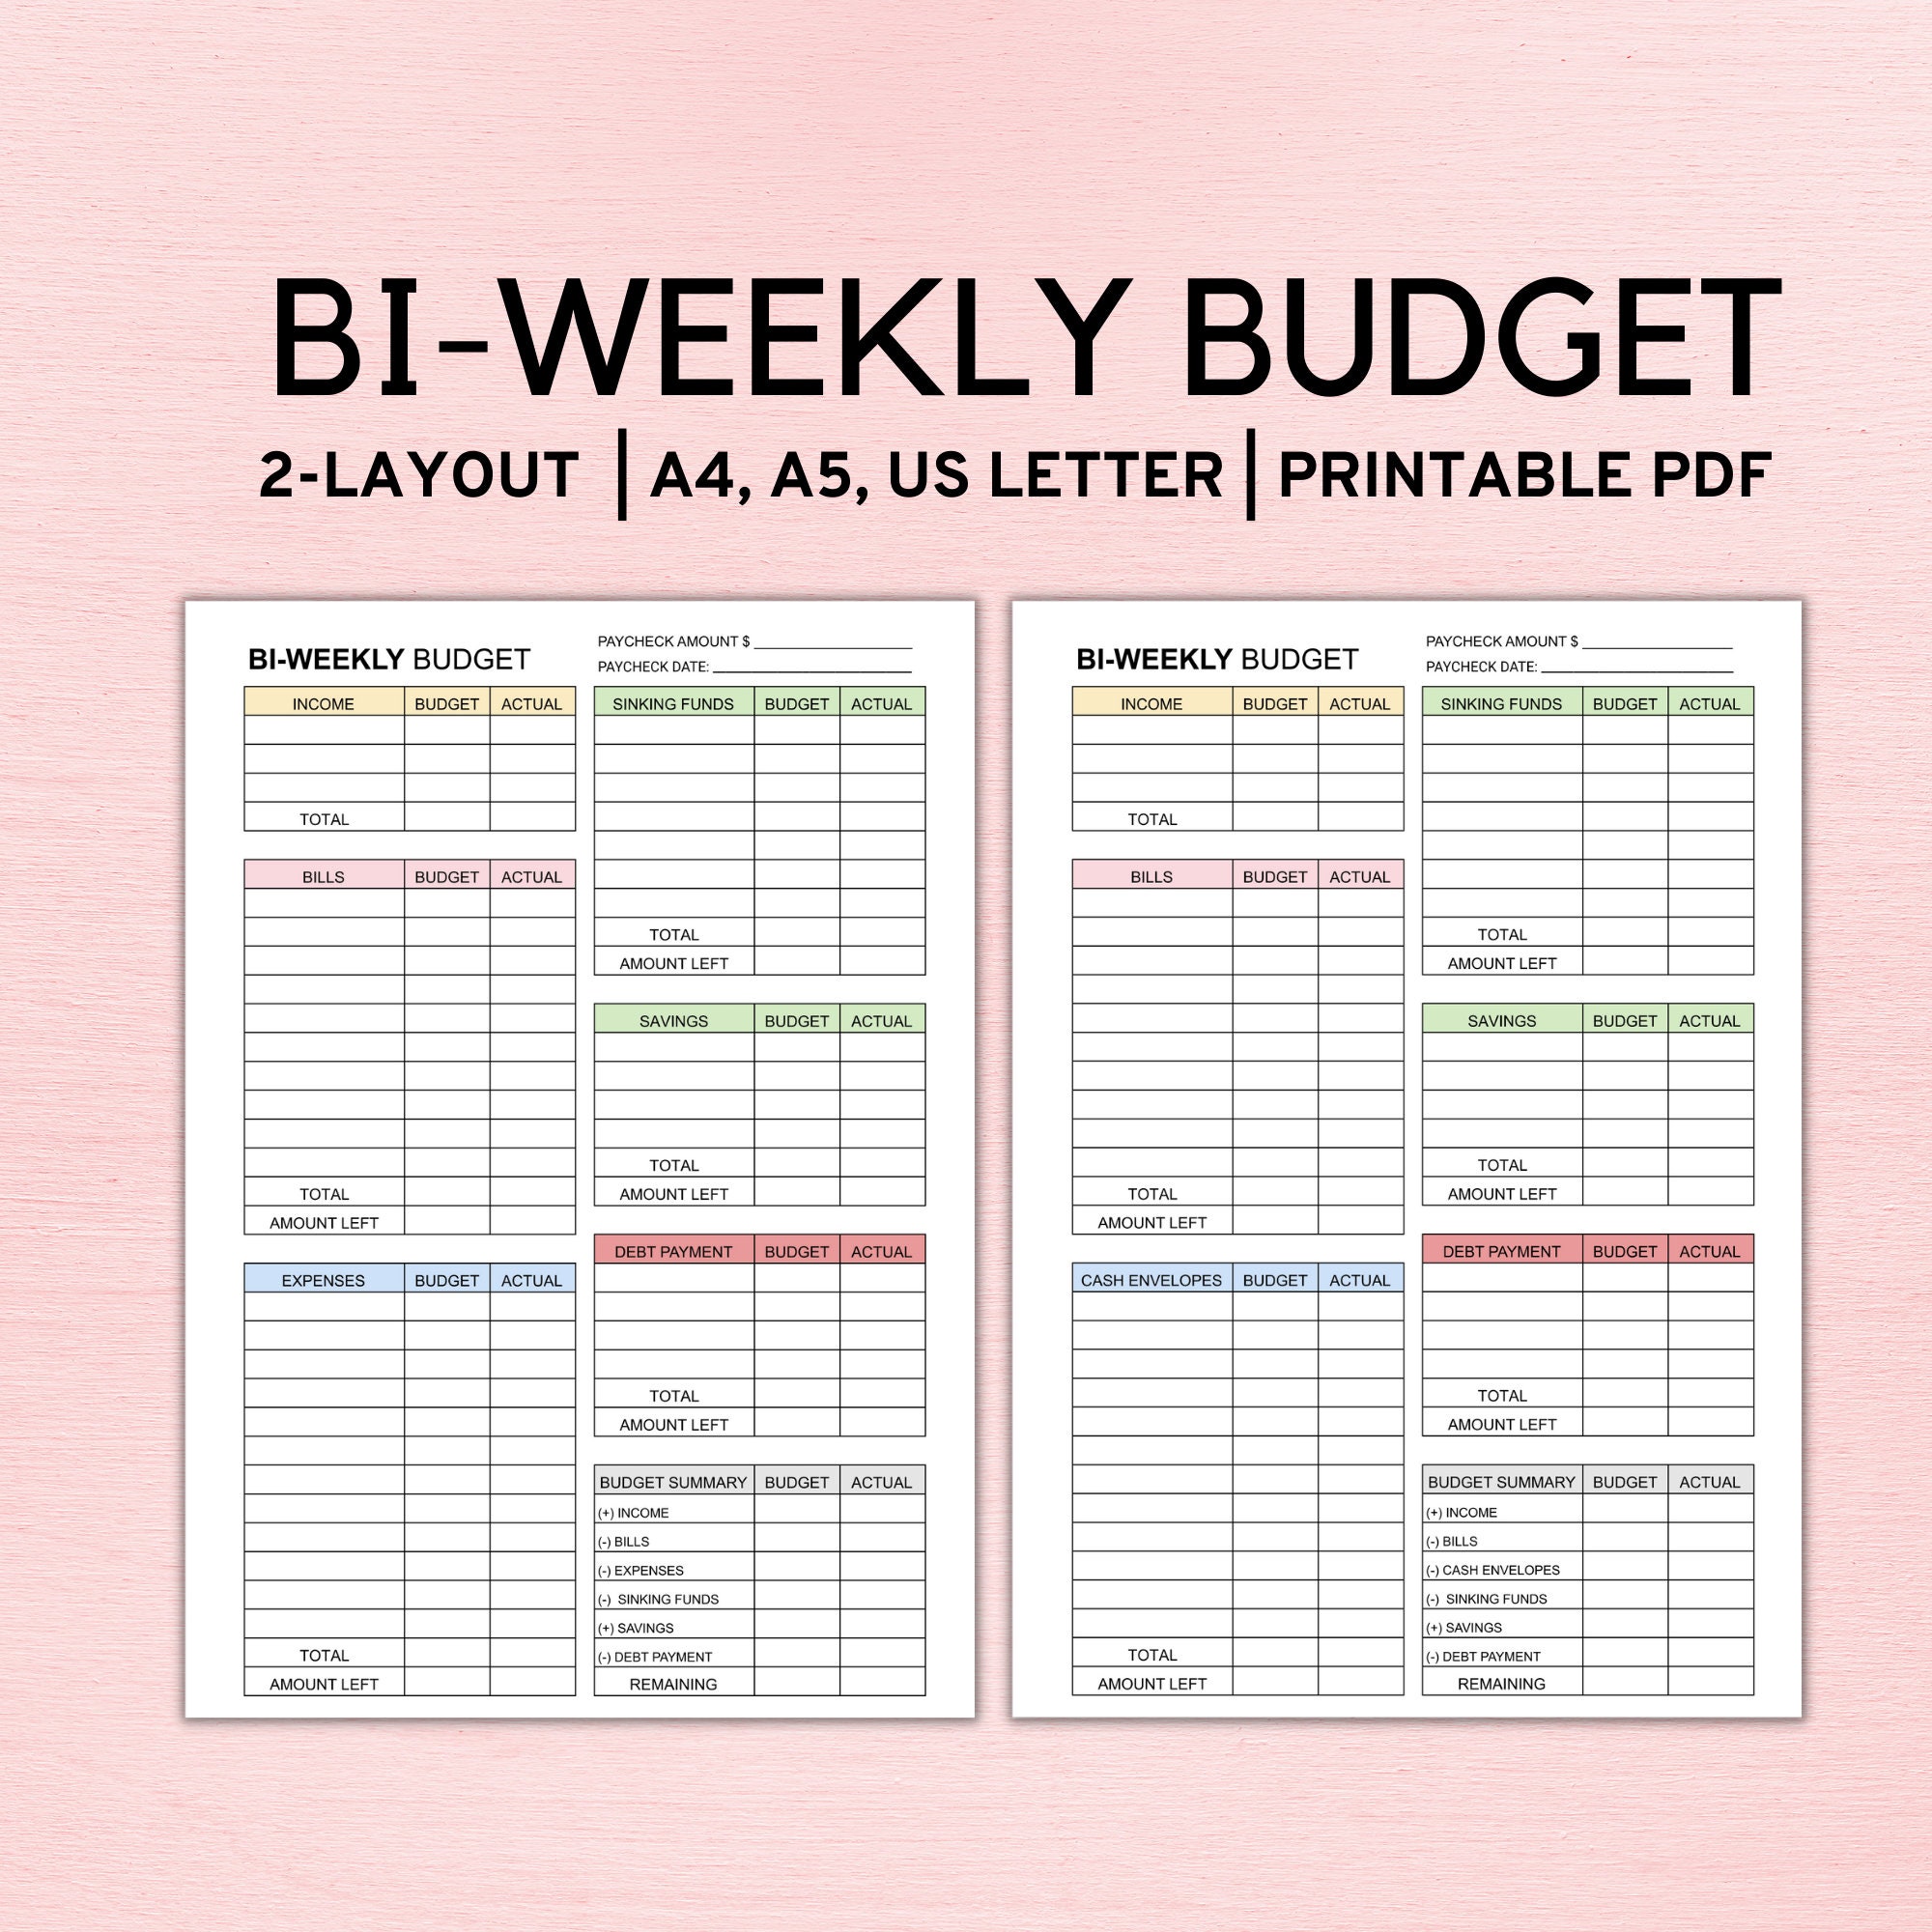 Free Printable Bi Weekly Budget Template Printable Templates